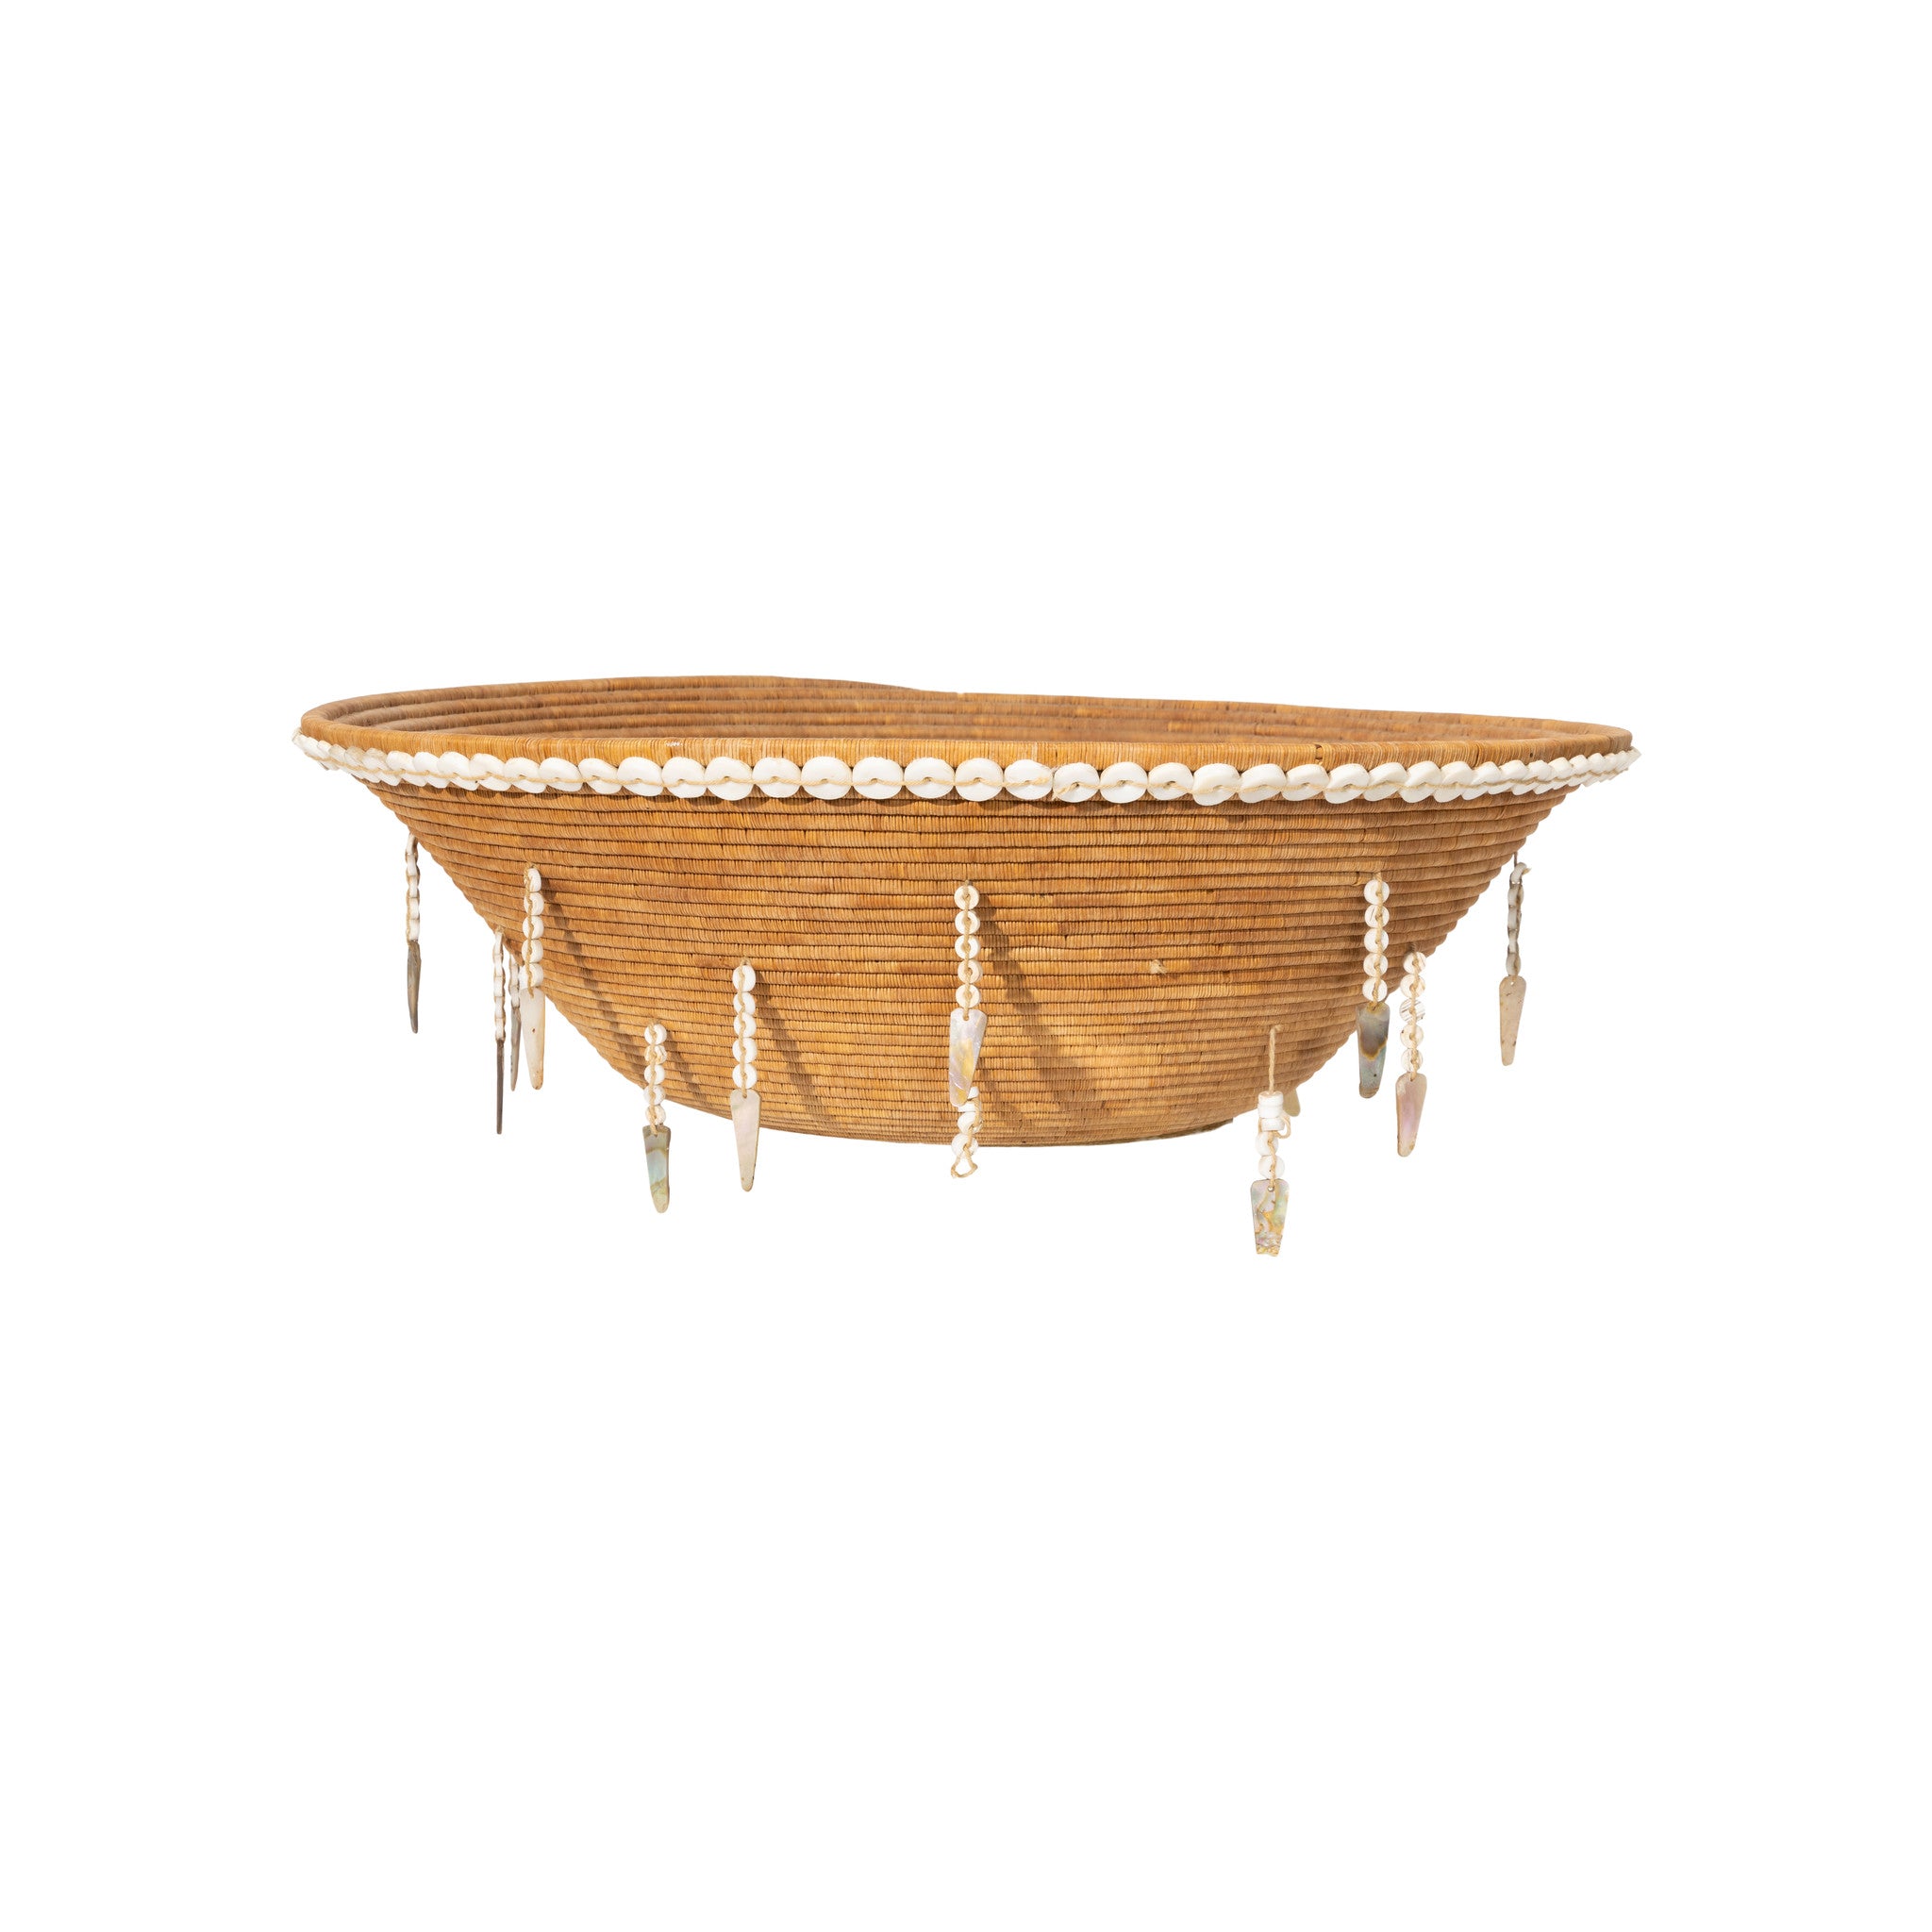 Pomo Treasure Basket, Native, Basketry, Vertical